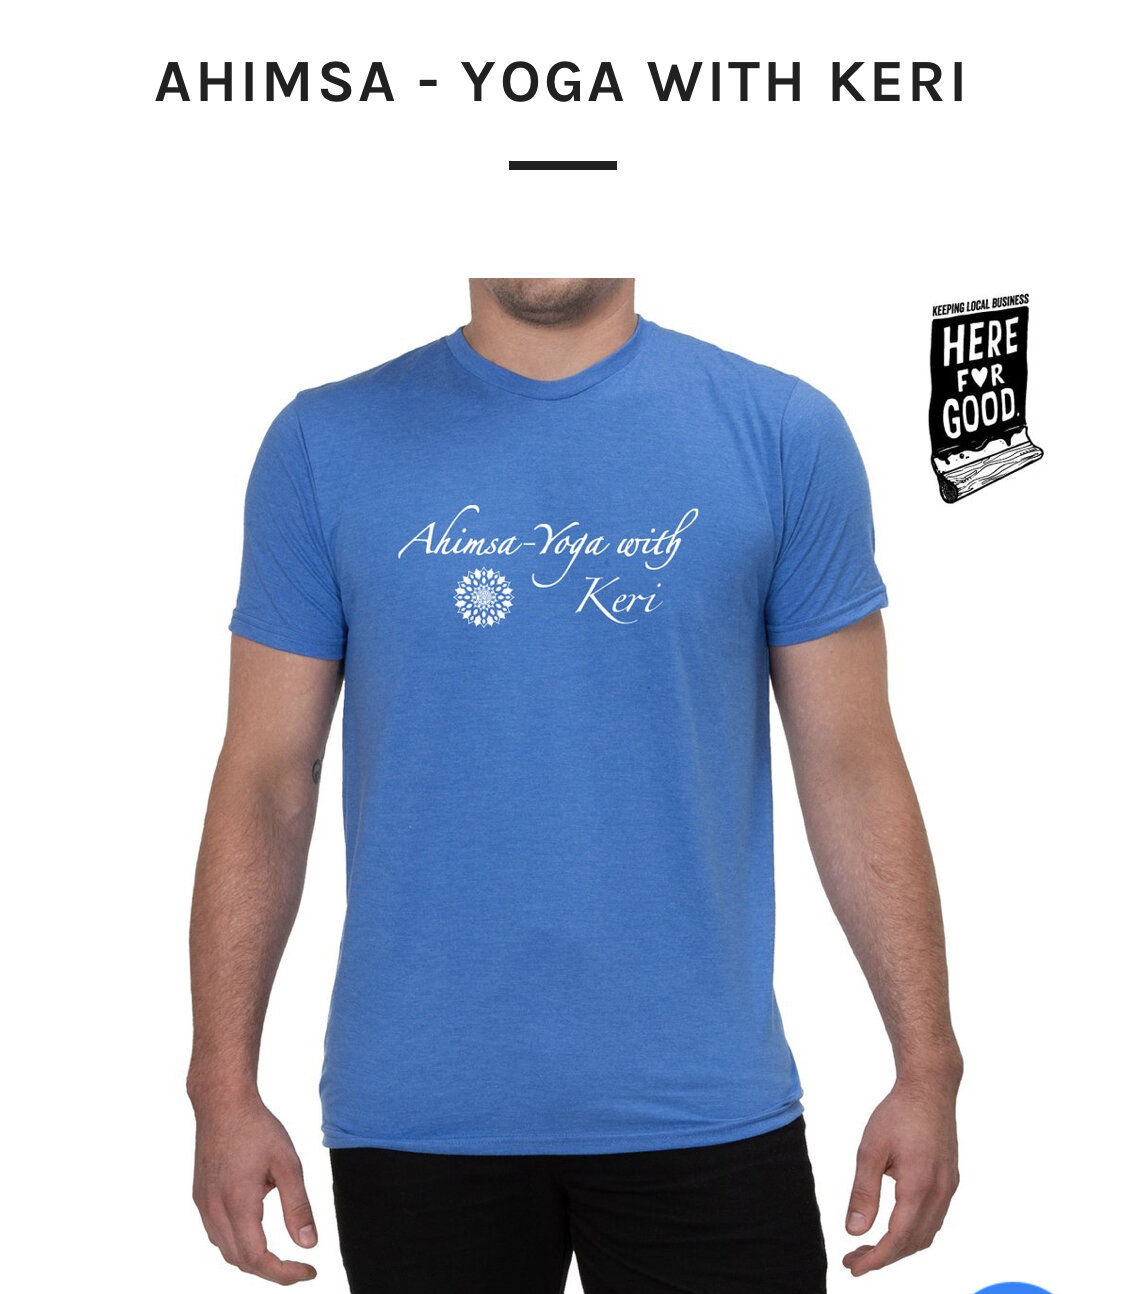 ahimsa keri with yoga t shirt art deli rockford here for good rkfd.jpeg